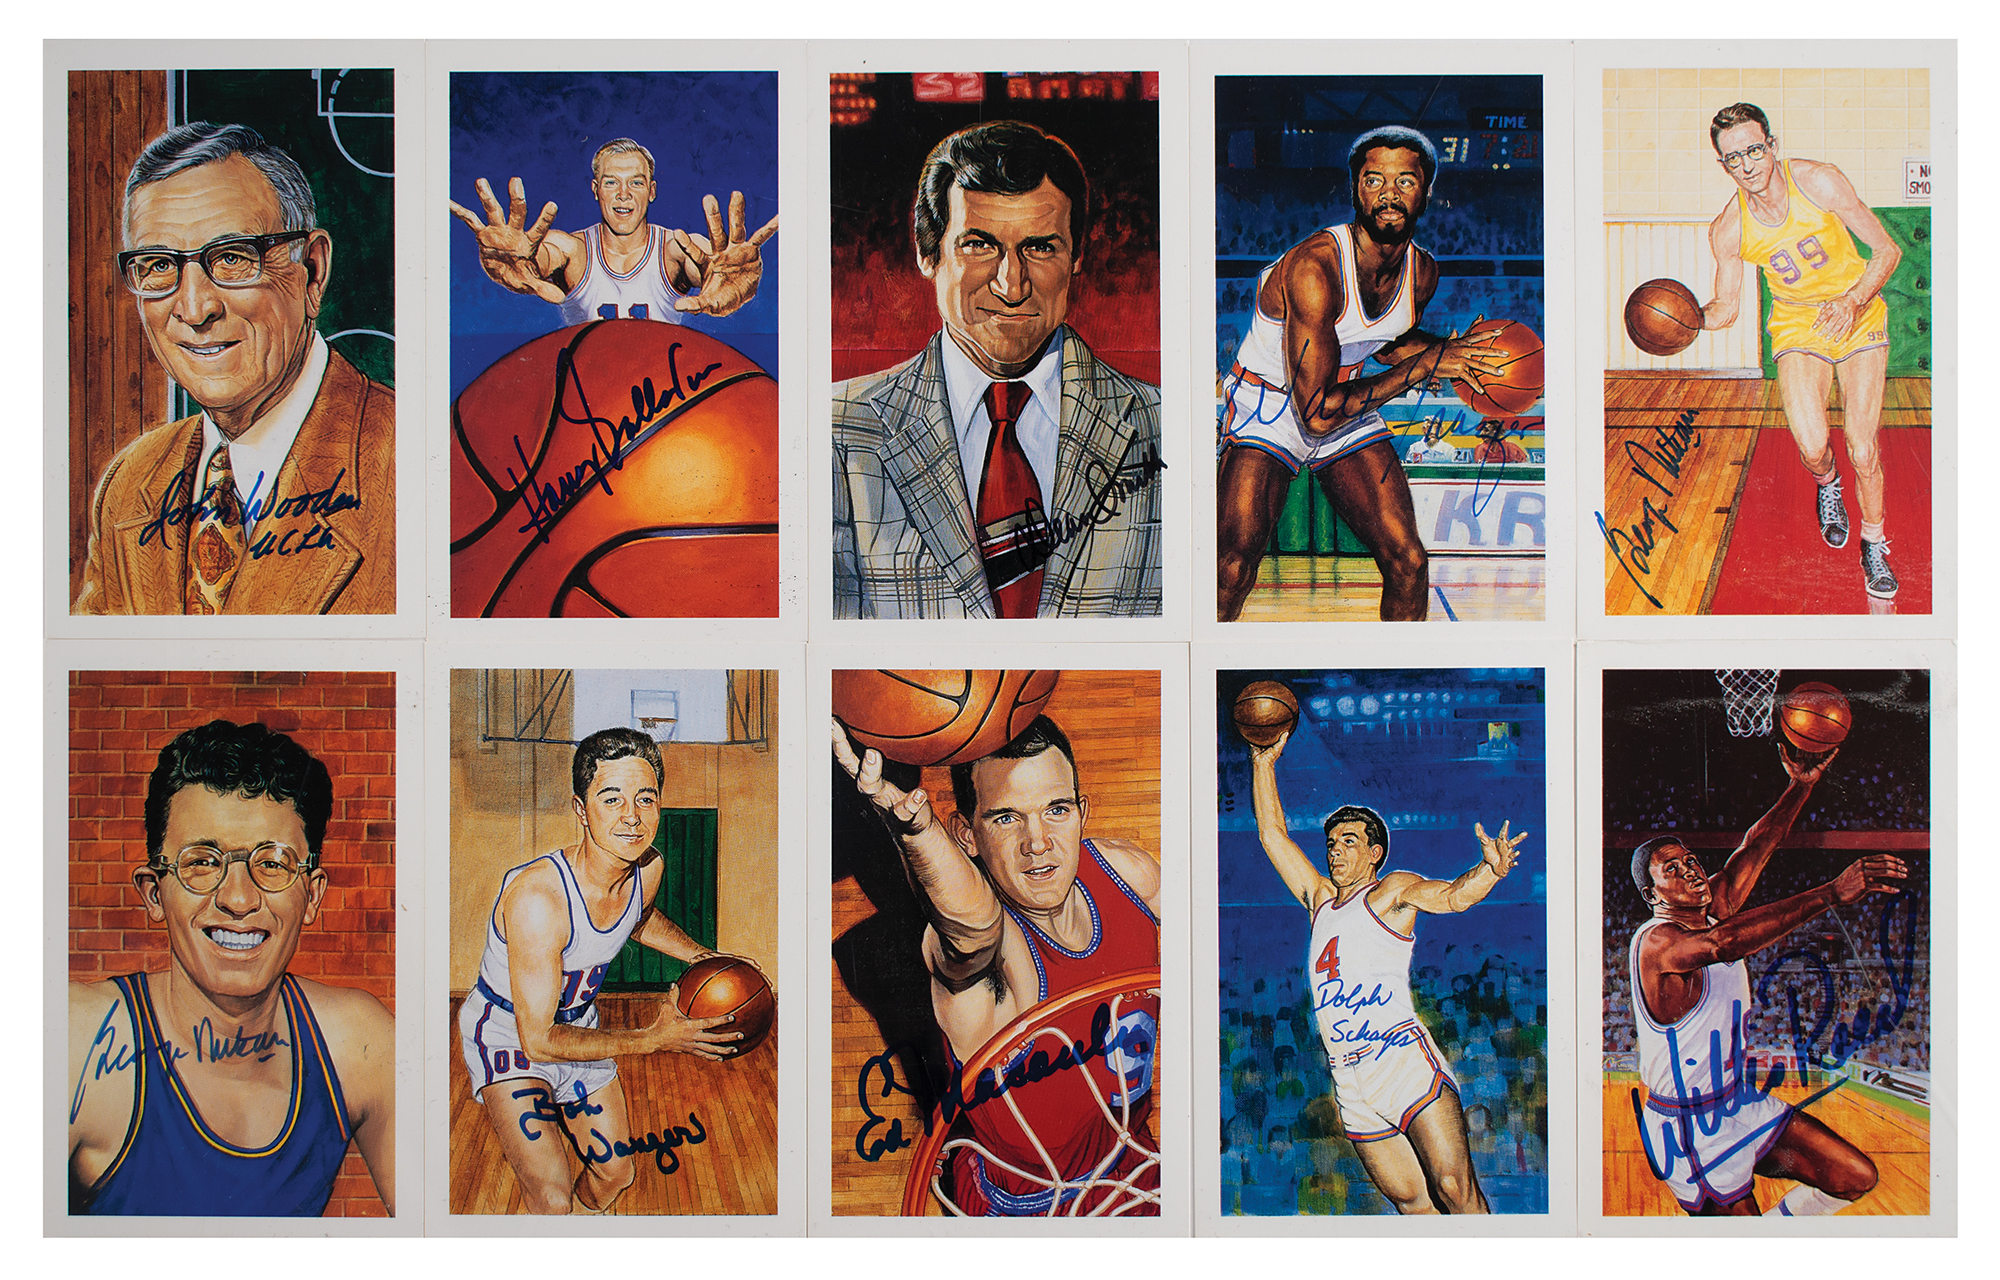 Nate Thurmond (Hall of Fame) Basketball Cards